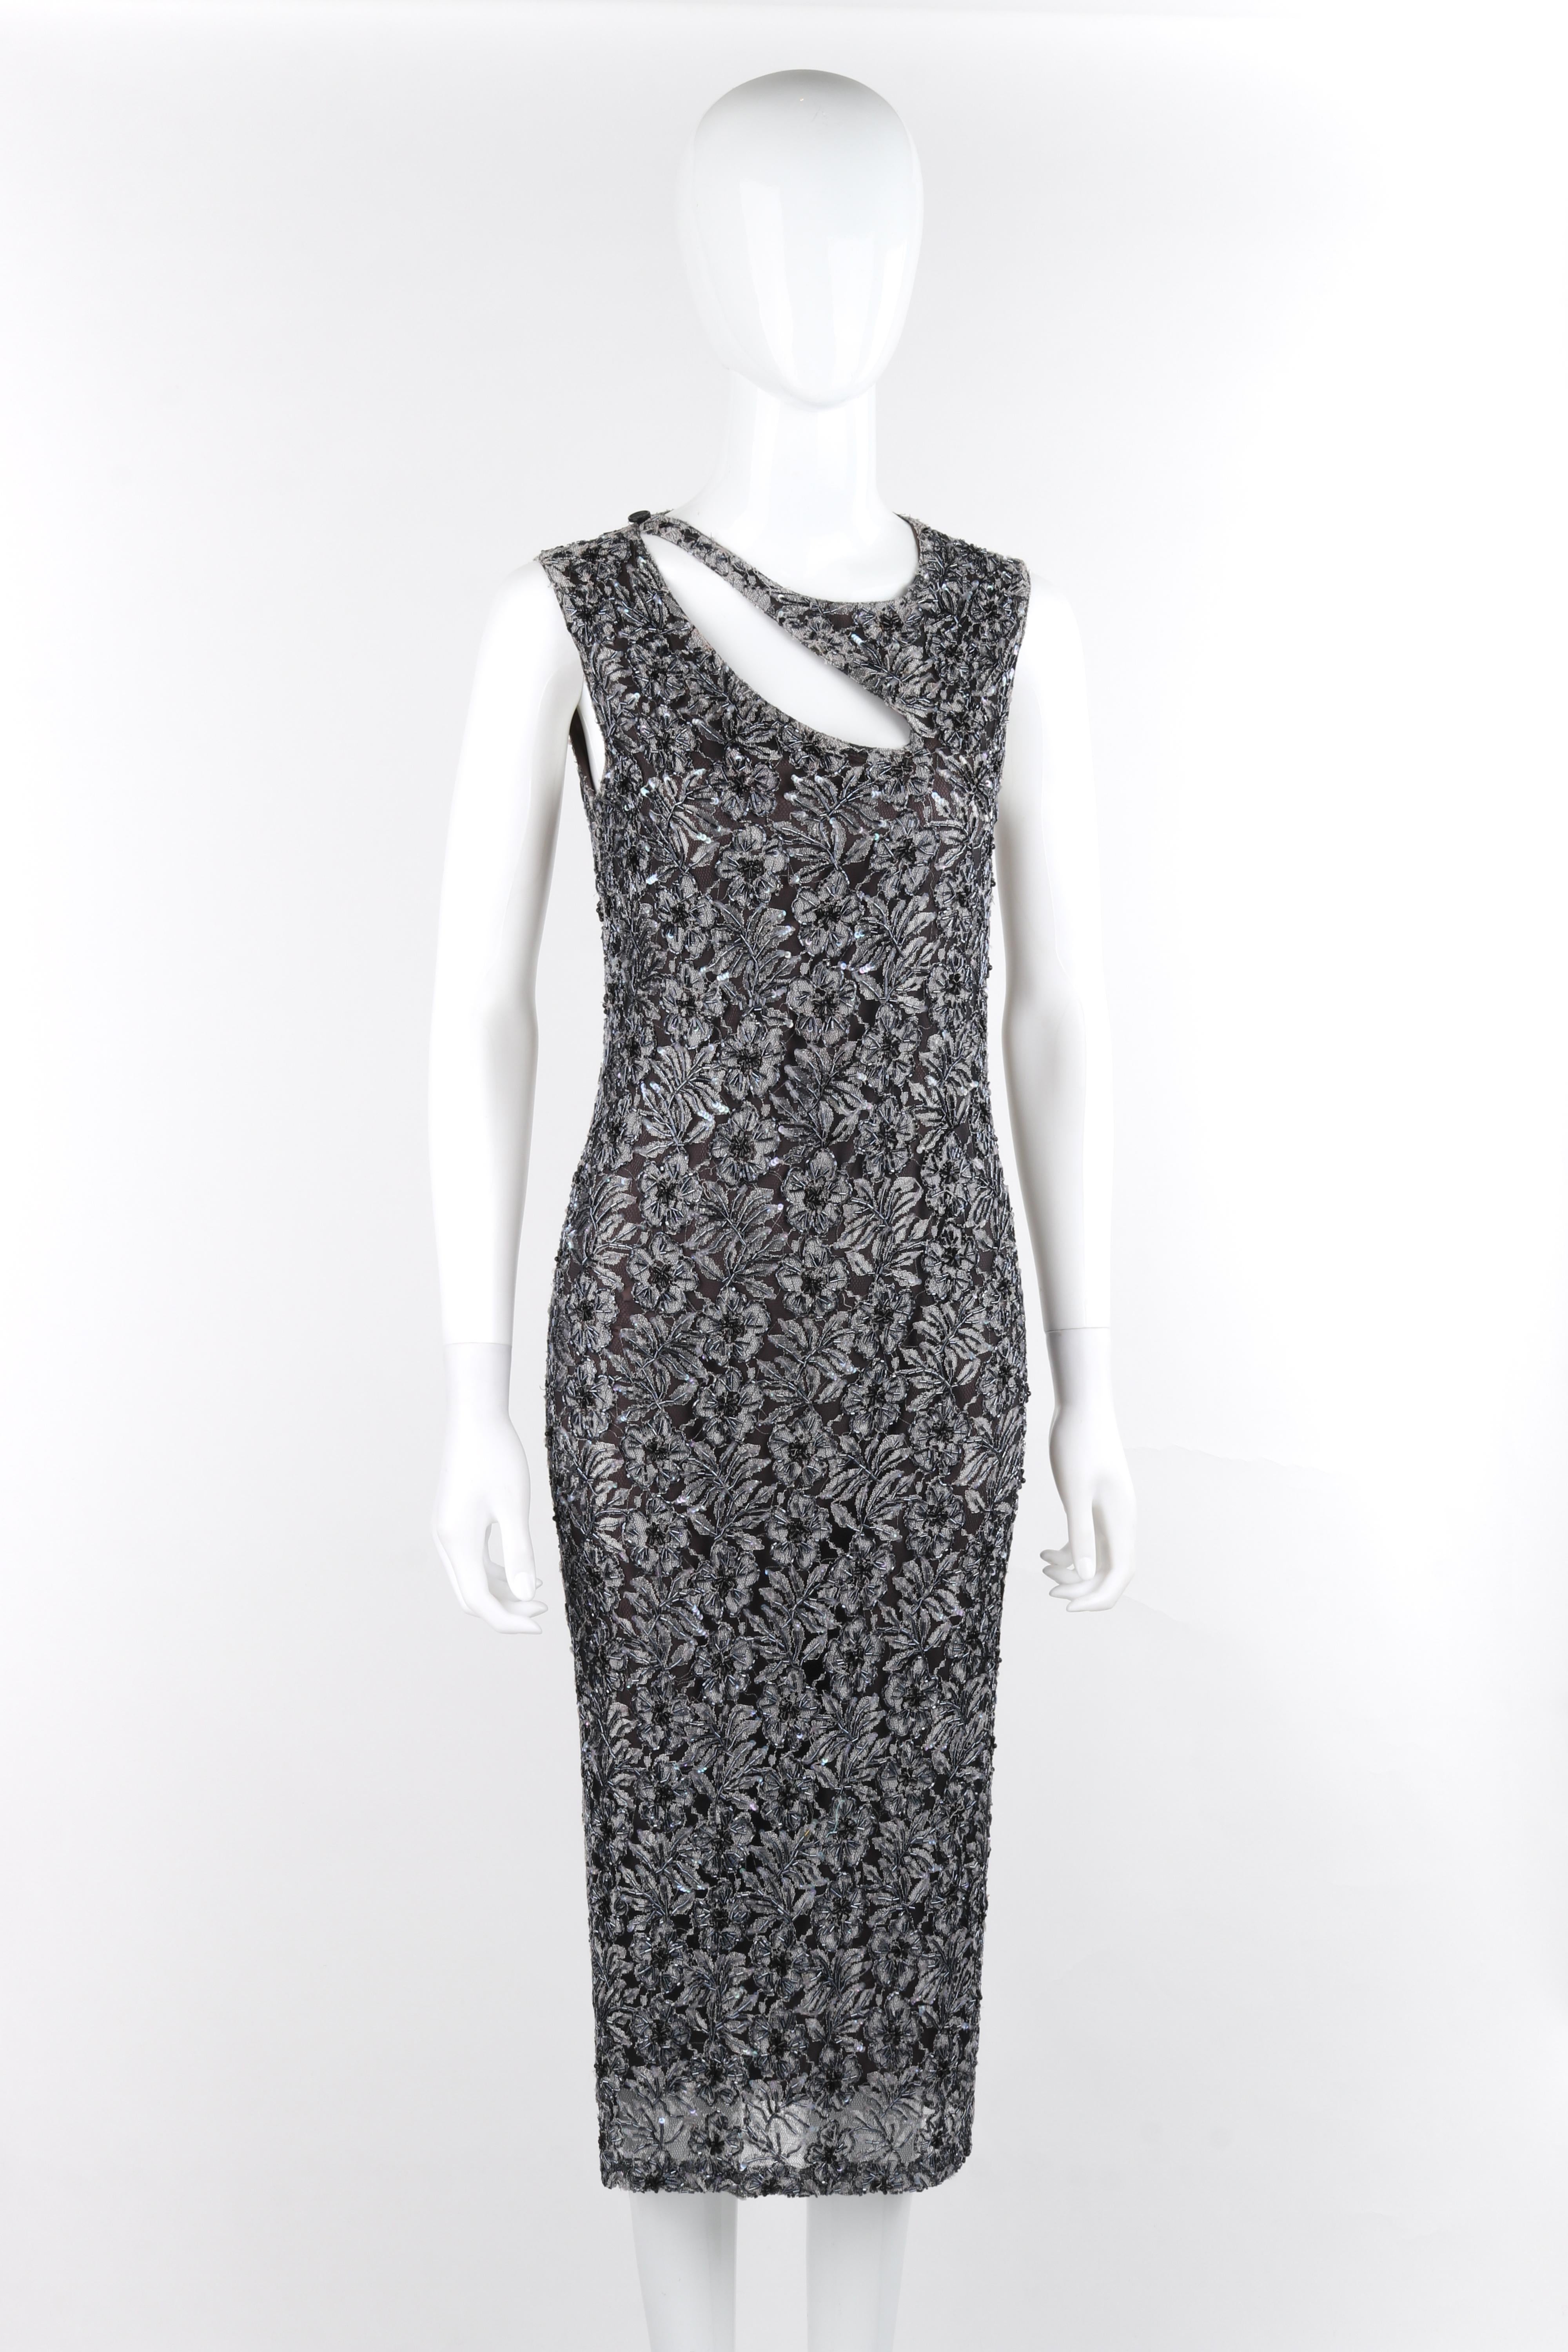 ALEXANDER McQUEEN c.1999 Vtg Grau Pailletten Perlen Spitze verschönert Ausschnitt Kleid Damen im Angebot